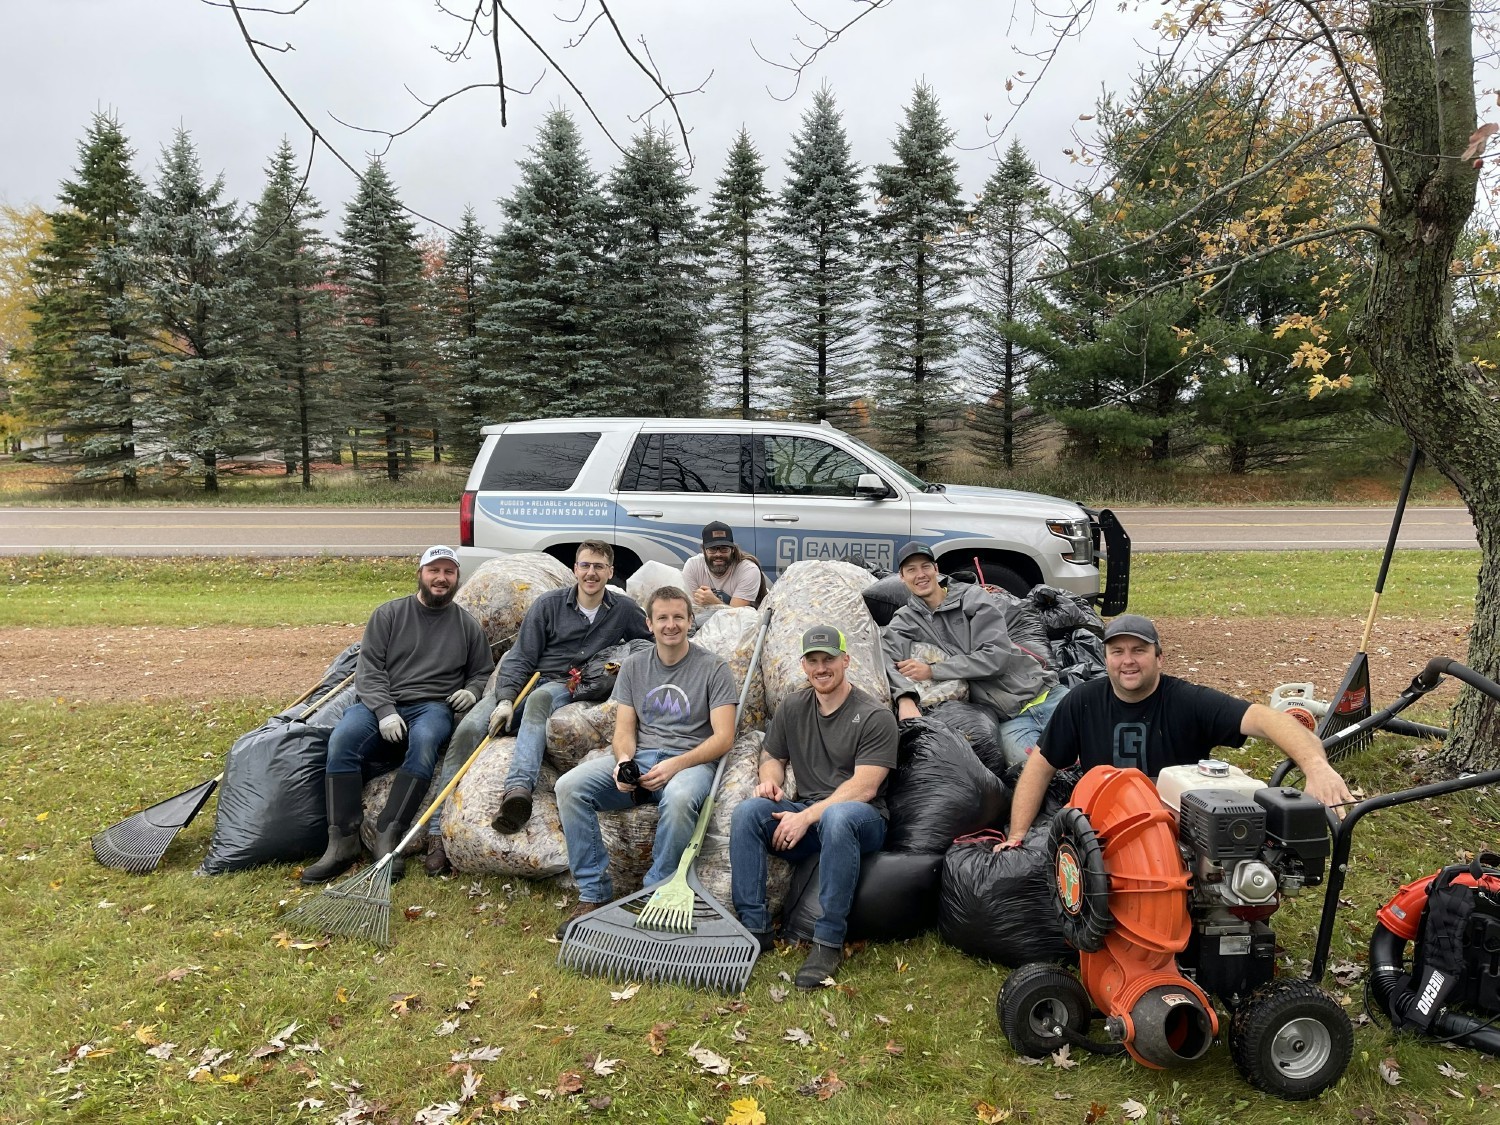 Team members used their volunteer day of to rake leaves for United Way rake-a-thon.